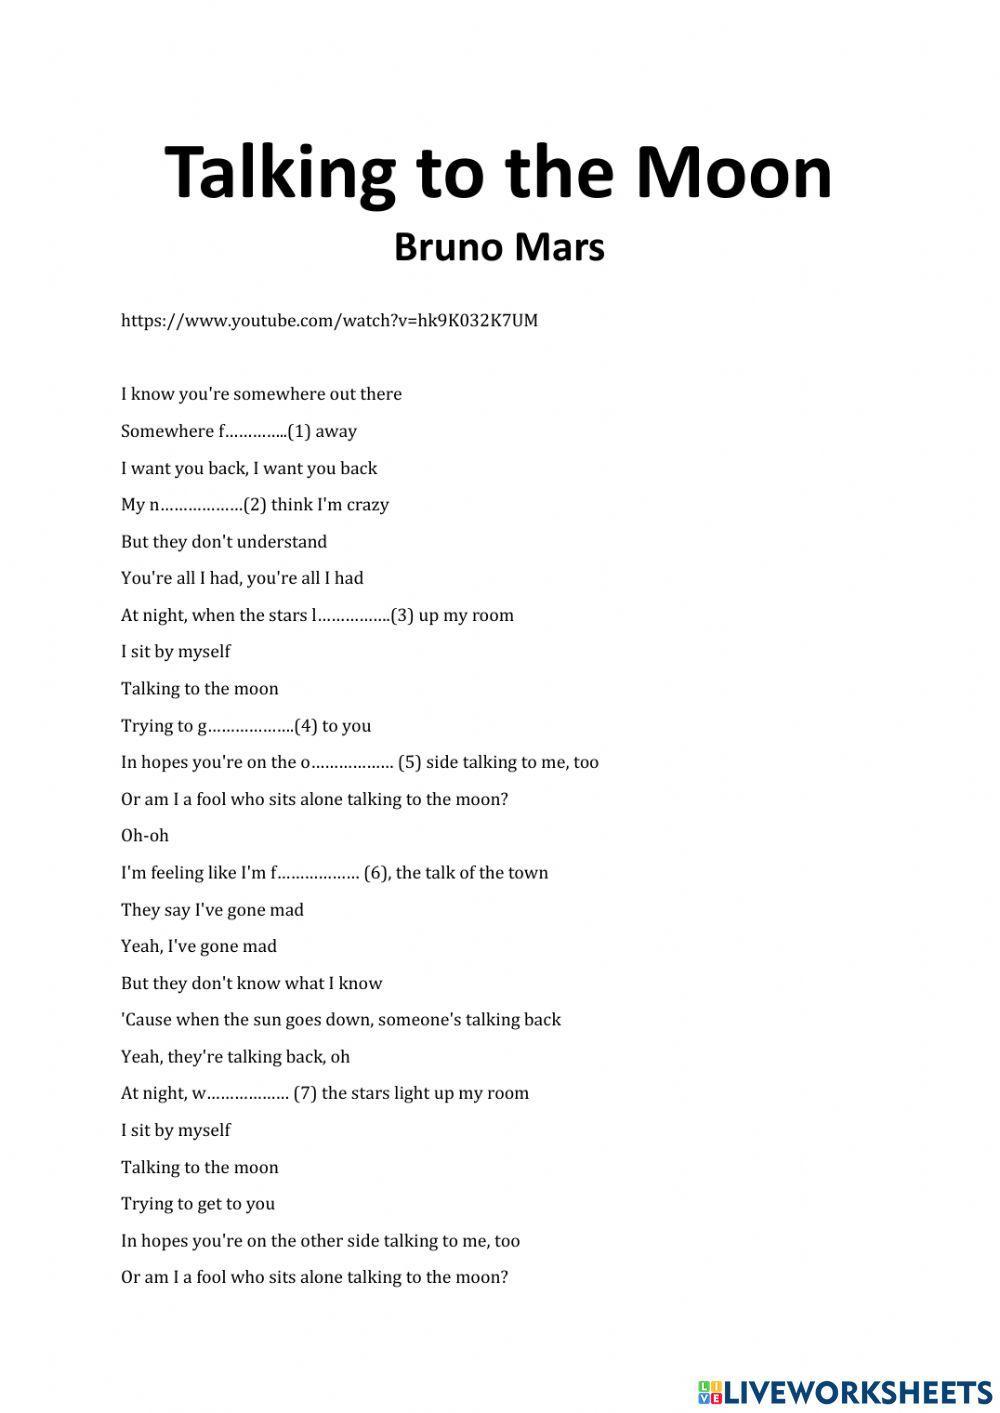 Talking to the Moon - Bruno Mars (TikTok song) worksheet | Live Worksheets